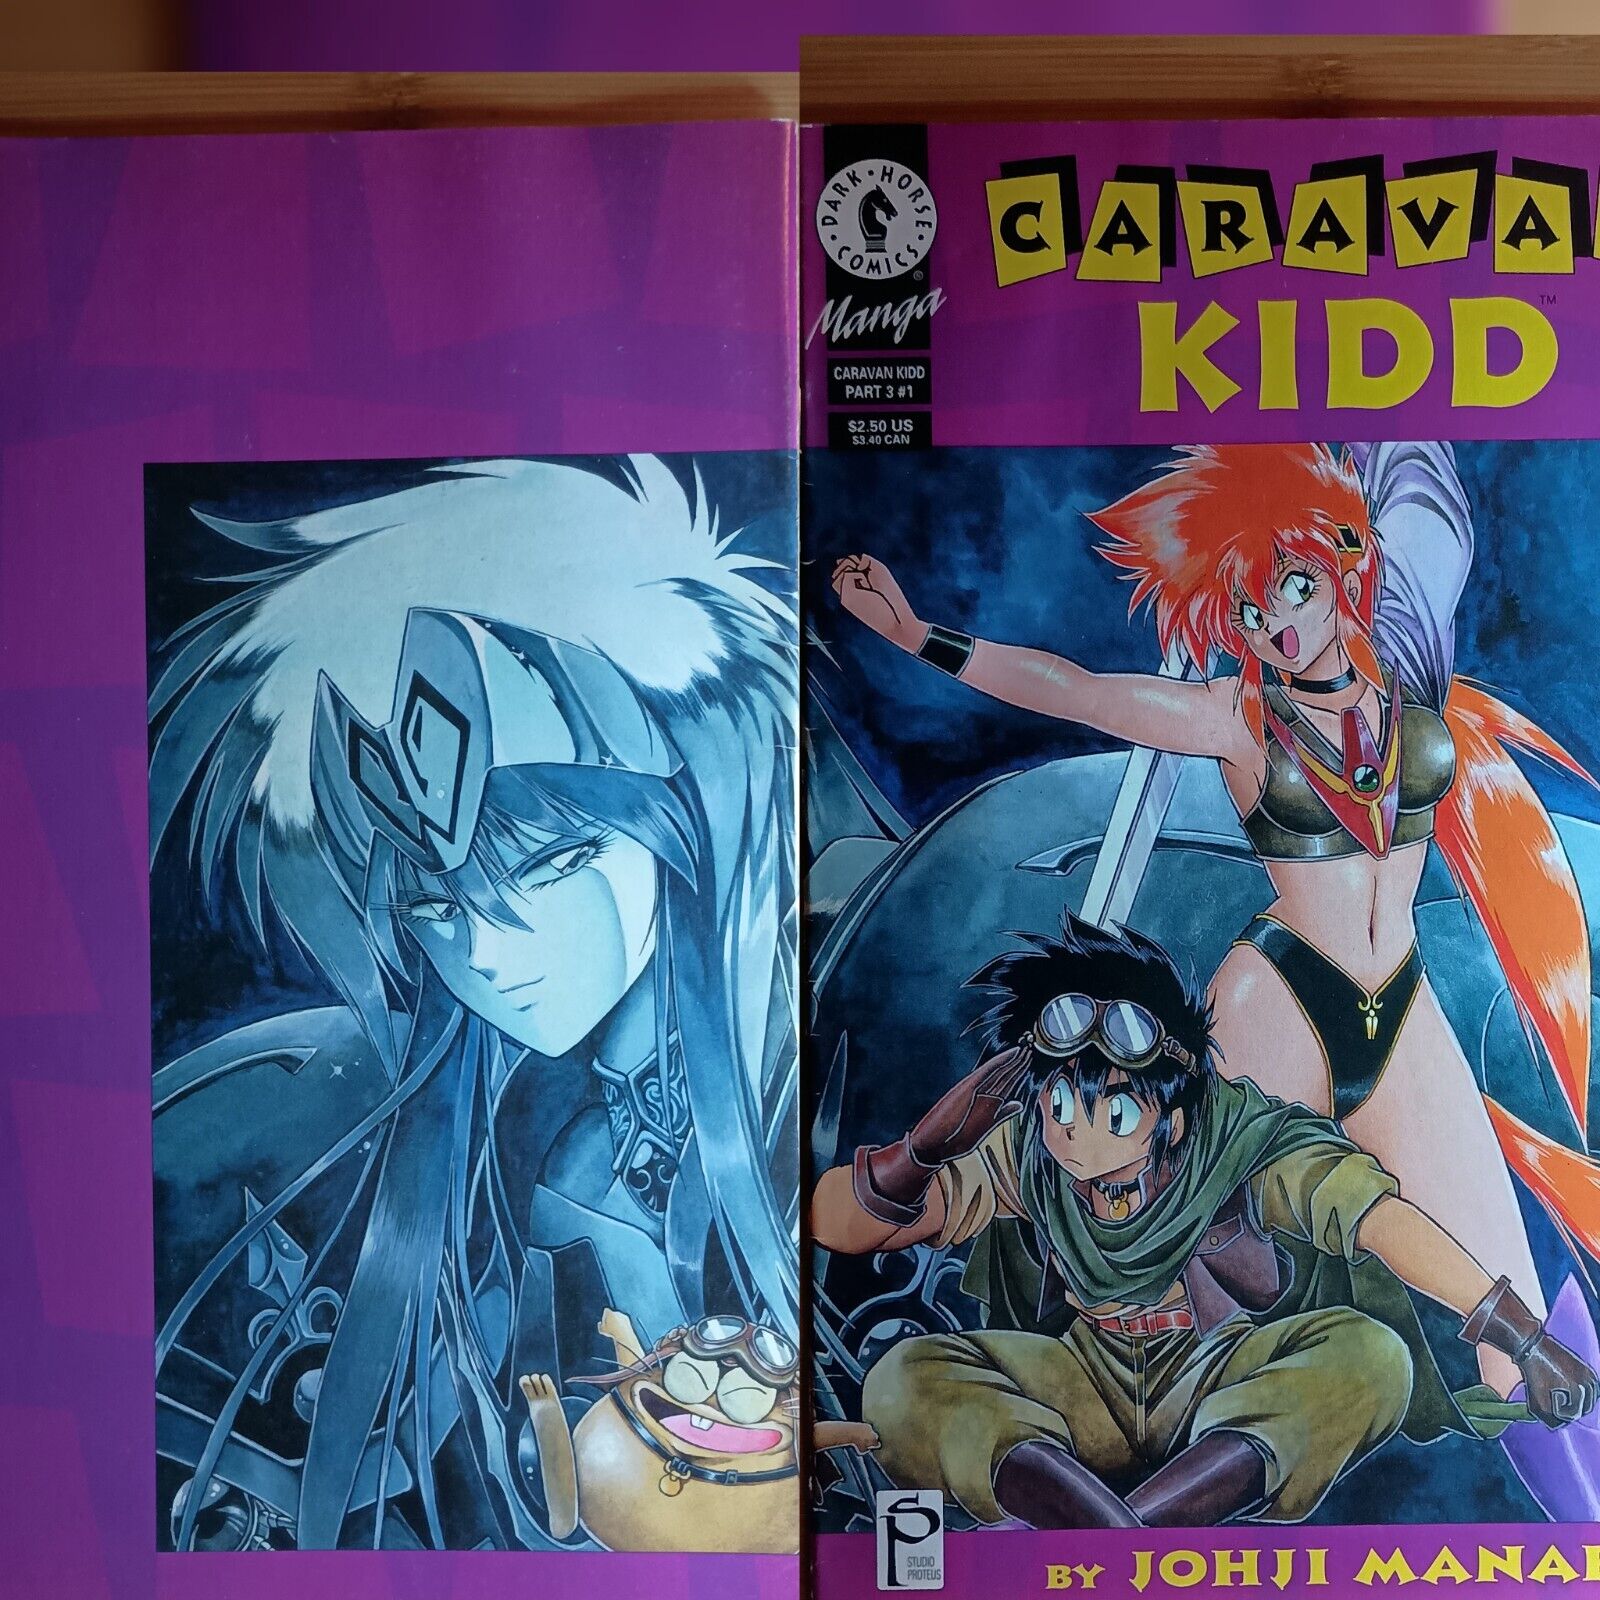 1994 Dark Horse Comics Manga Caravan Kidd Part 3 Issue 1 Wraparound Cover FREE S